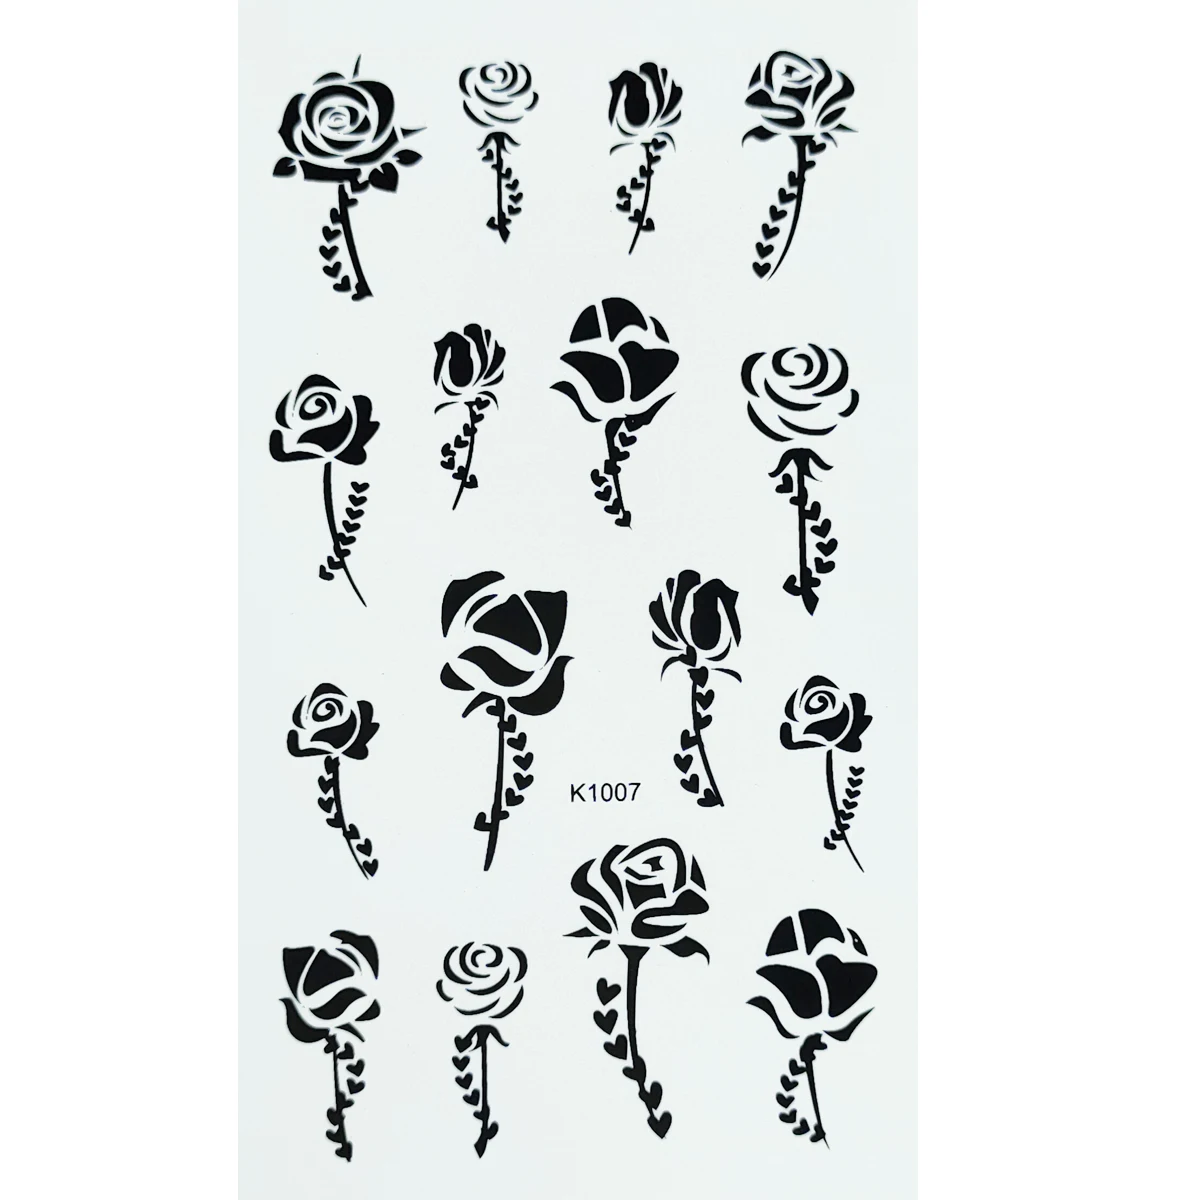 Rose Finger Tattoo Ideas for Women - Small Floral Flower Hand Tat -  www.MyBodiArt.com #tattoos | Thumb tattoos, Small finger tattoos, Tattoos  for women